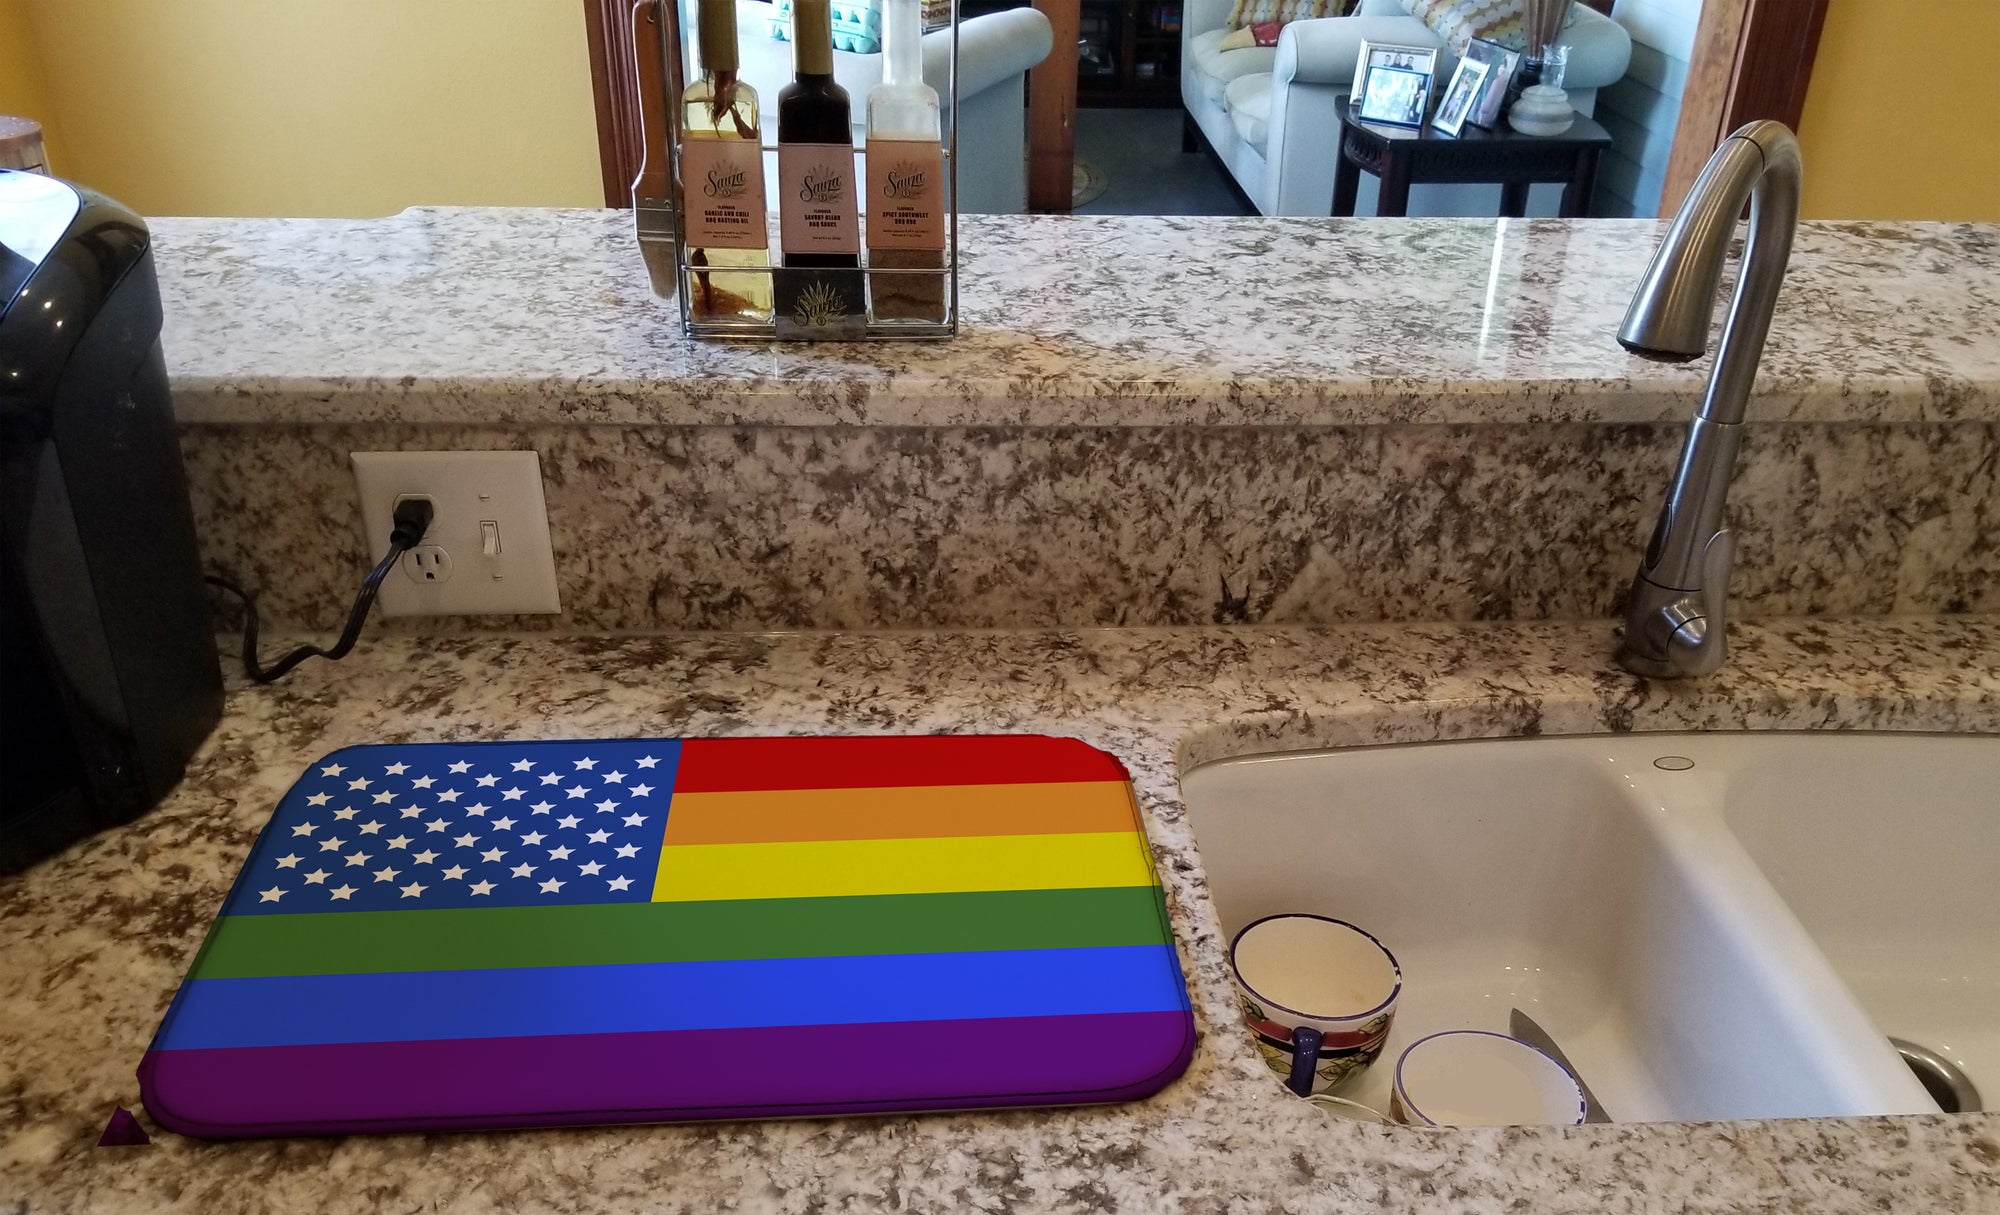 USA Gay Pride Dish Drying Mat  the-store.com.